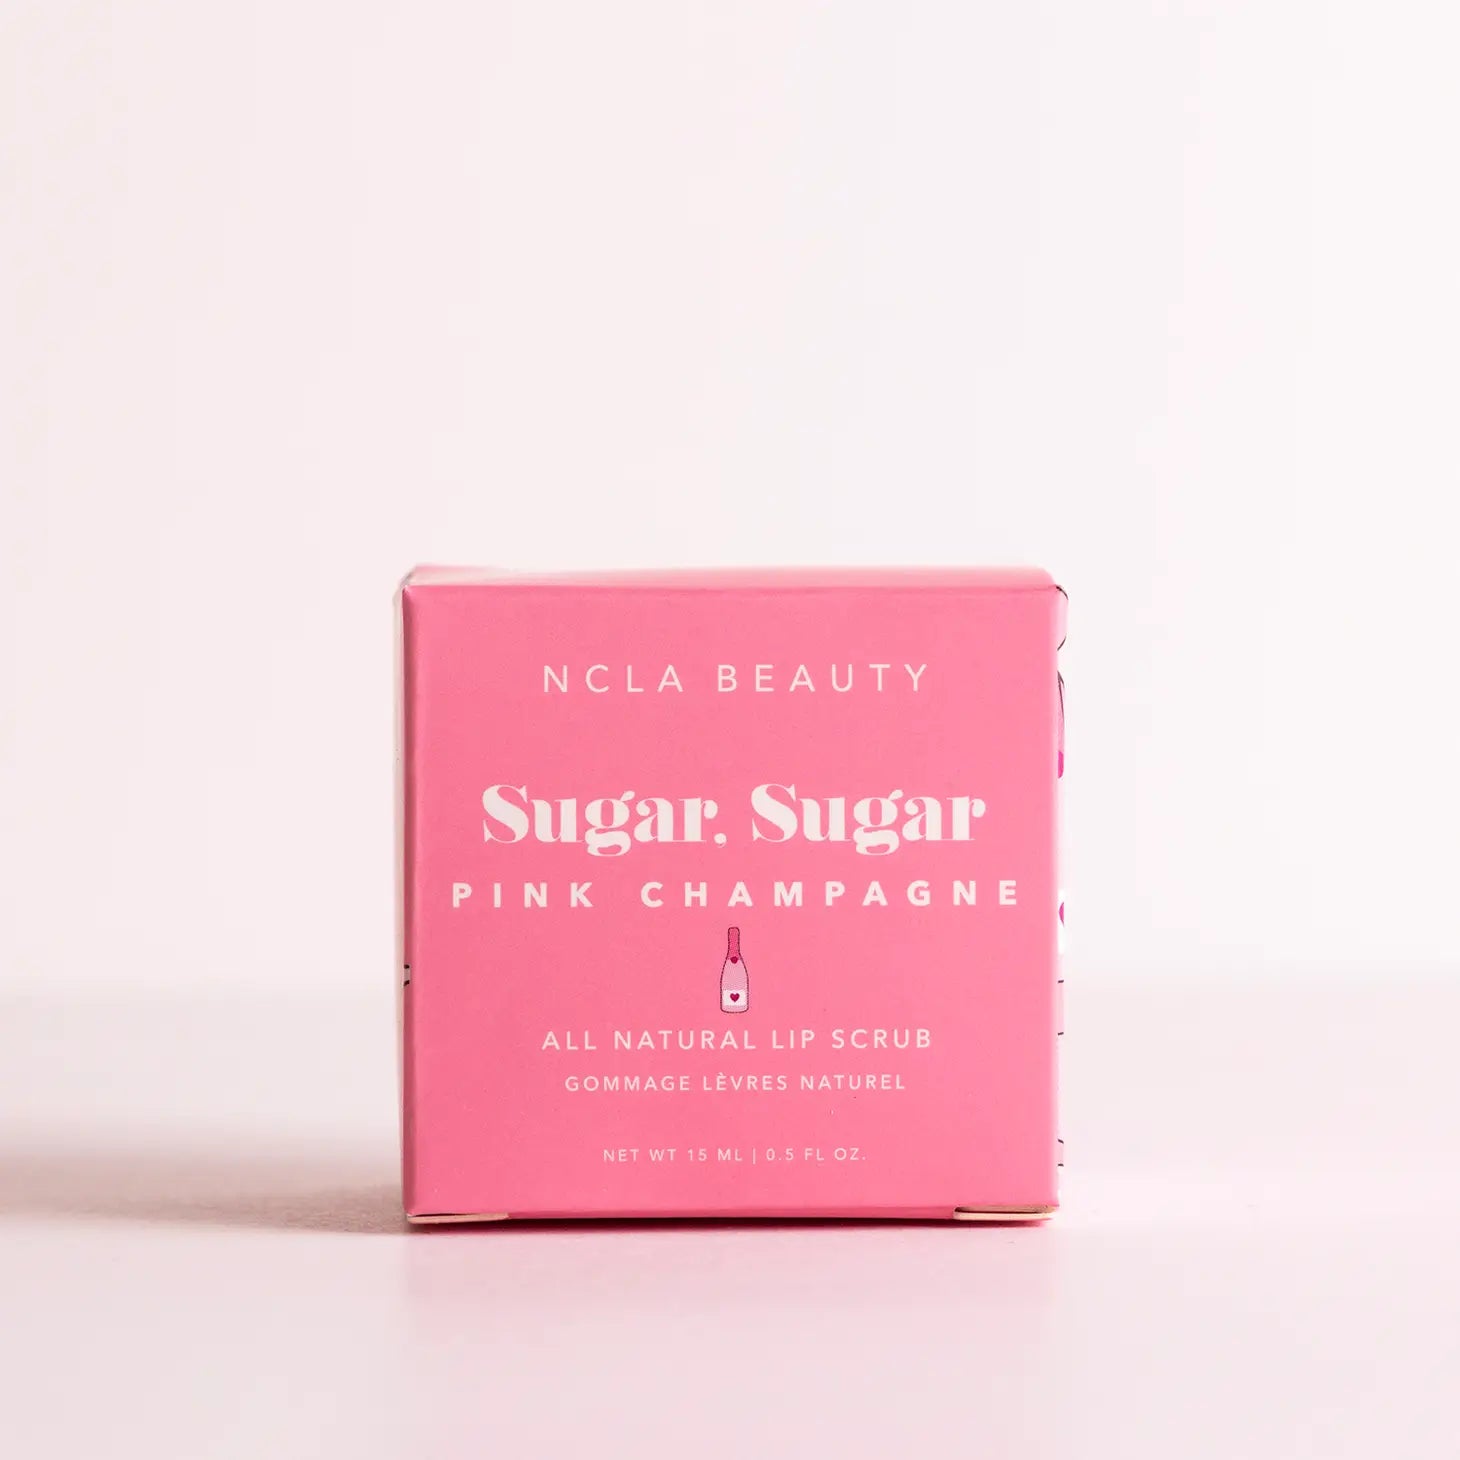 NCLA Beauty Sugar Sugar Pink Champagne Lip Scrub